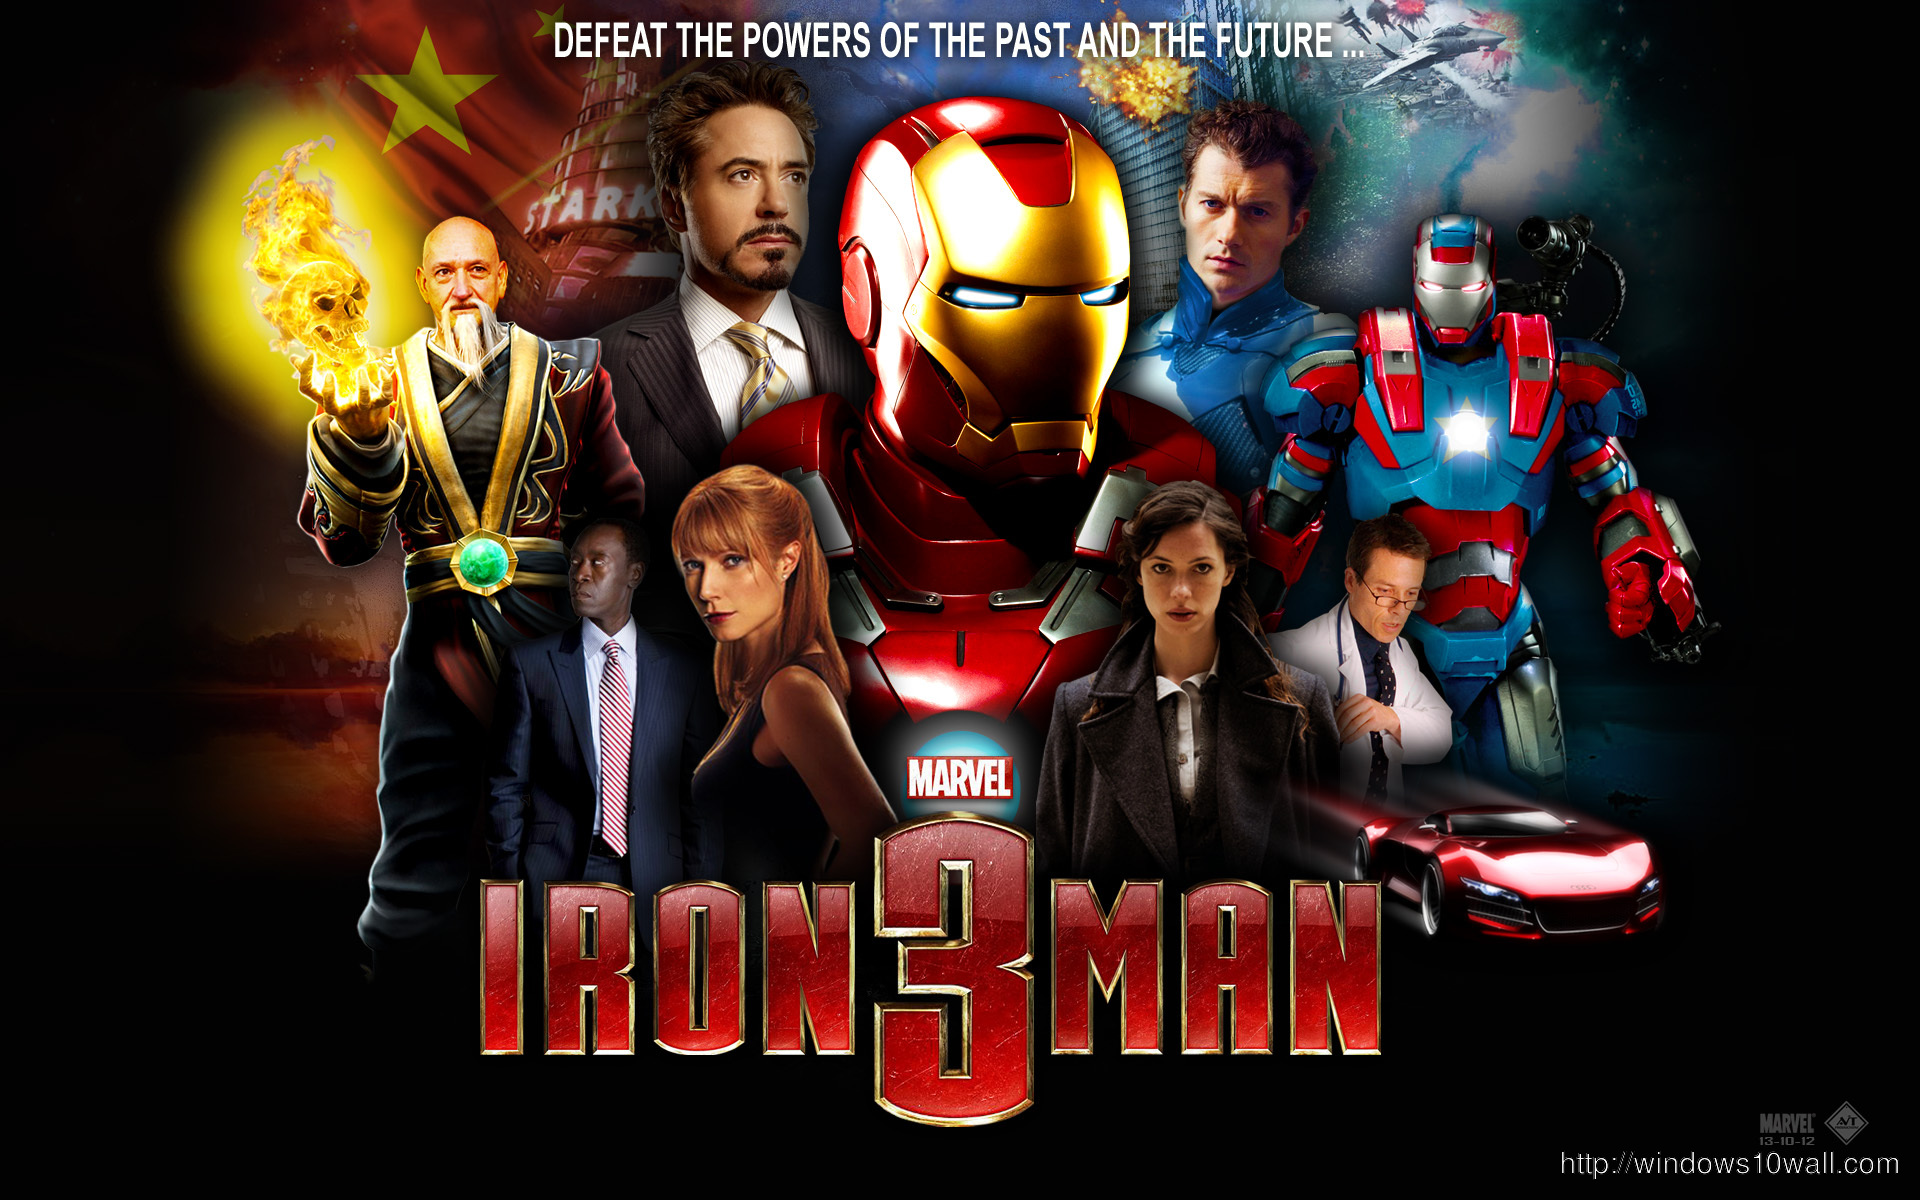 Iron Man 3 Movie wallpaper for desktop